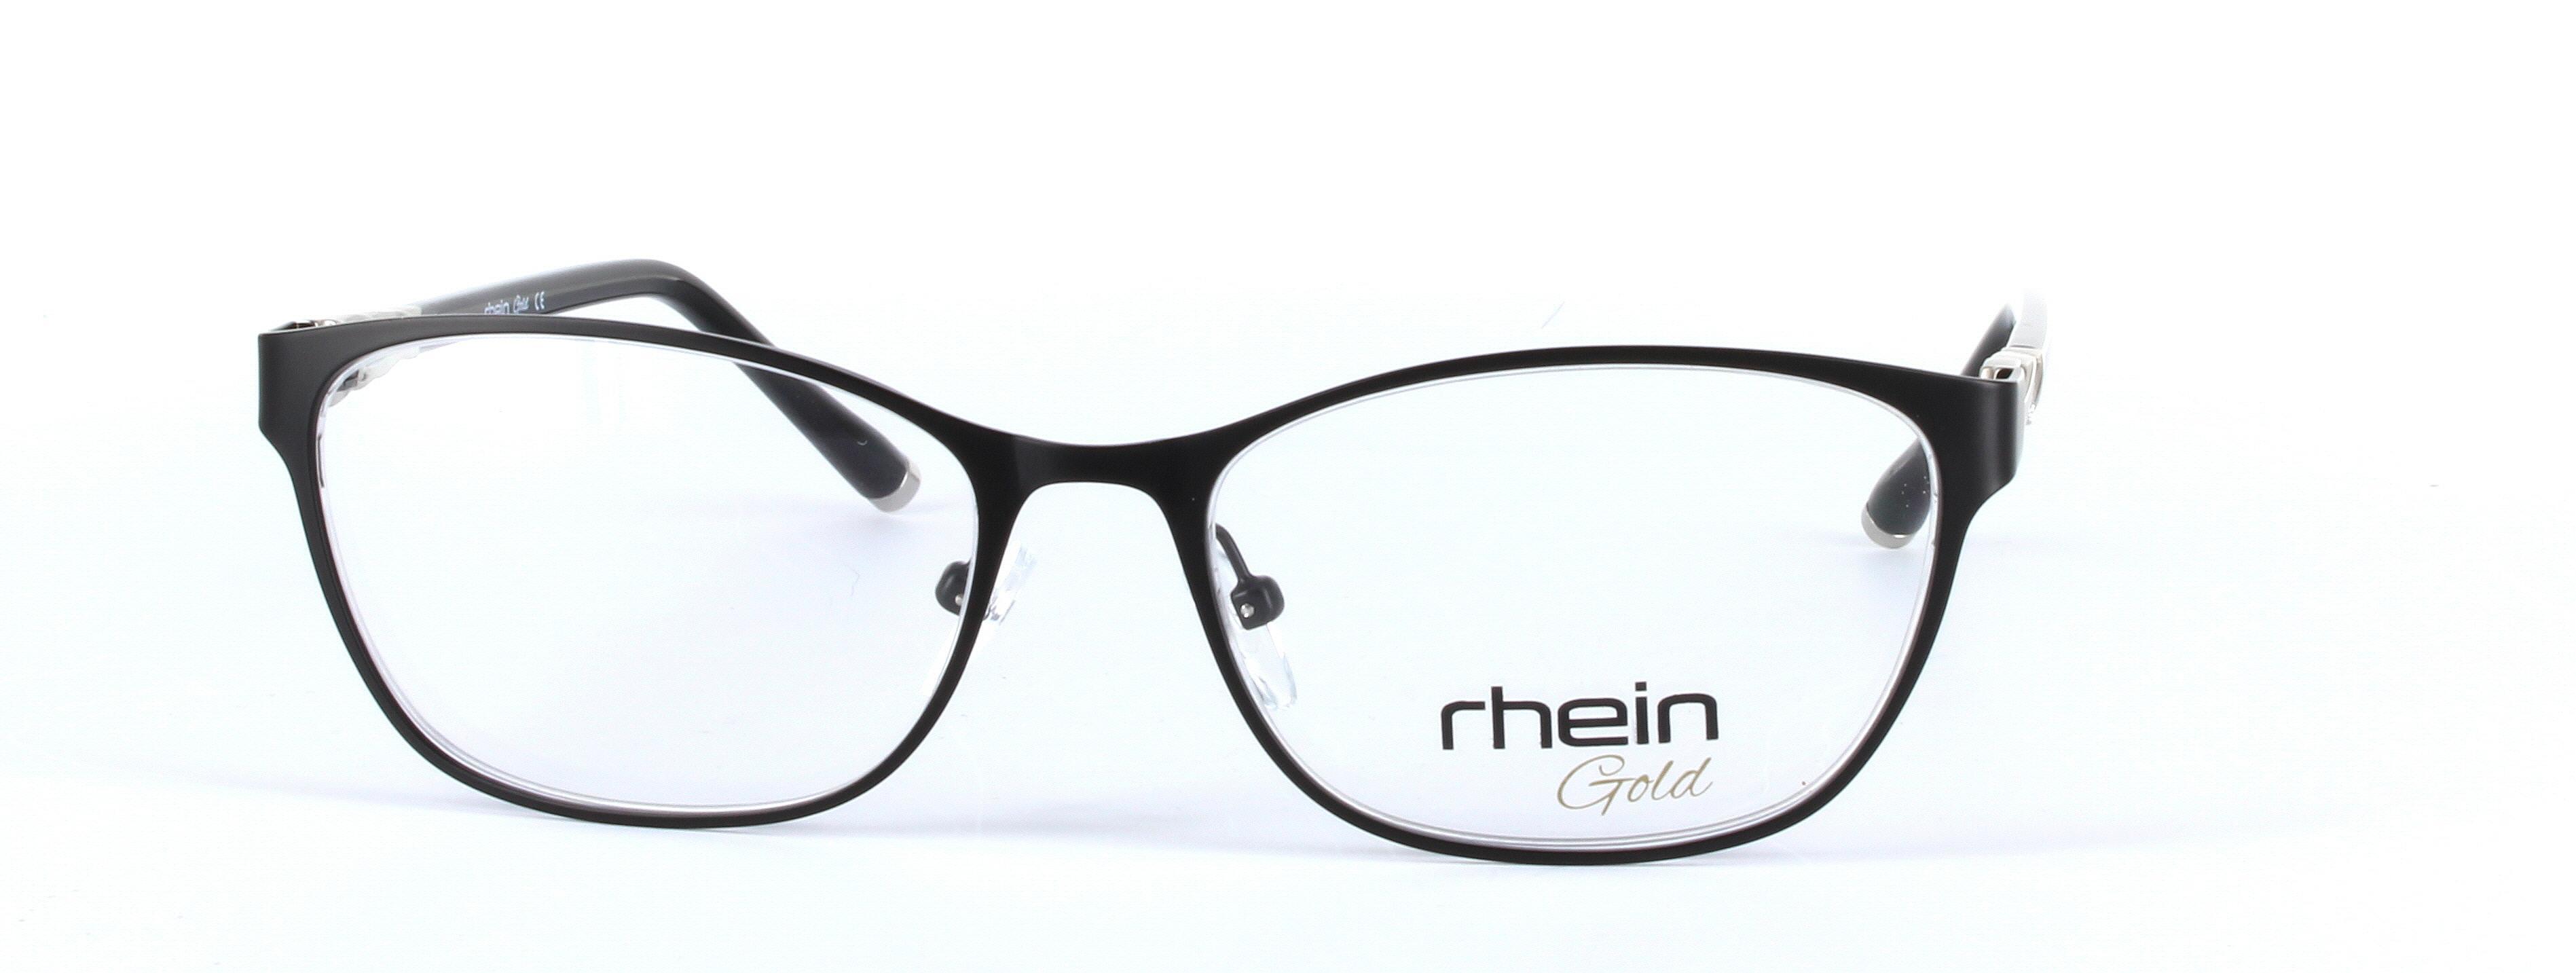 Nova Black Full Rim Oval Round Metal Glasses - Image View 5